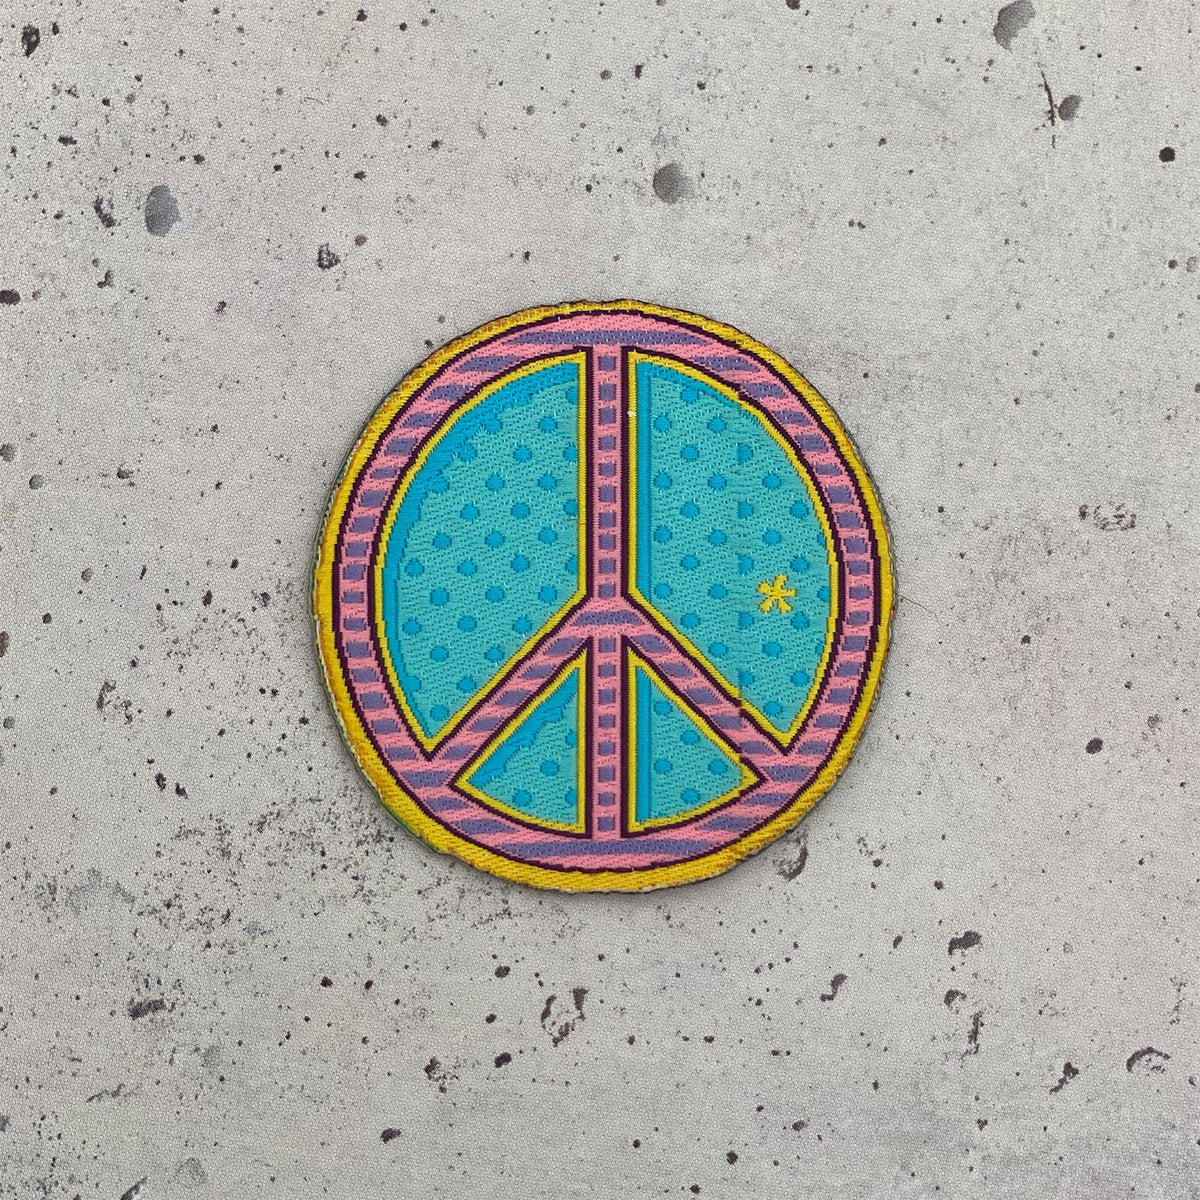 Sticker-Patch "Peace"